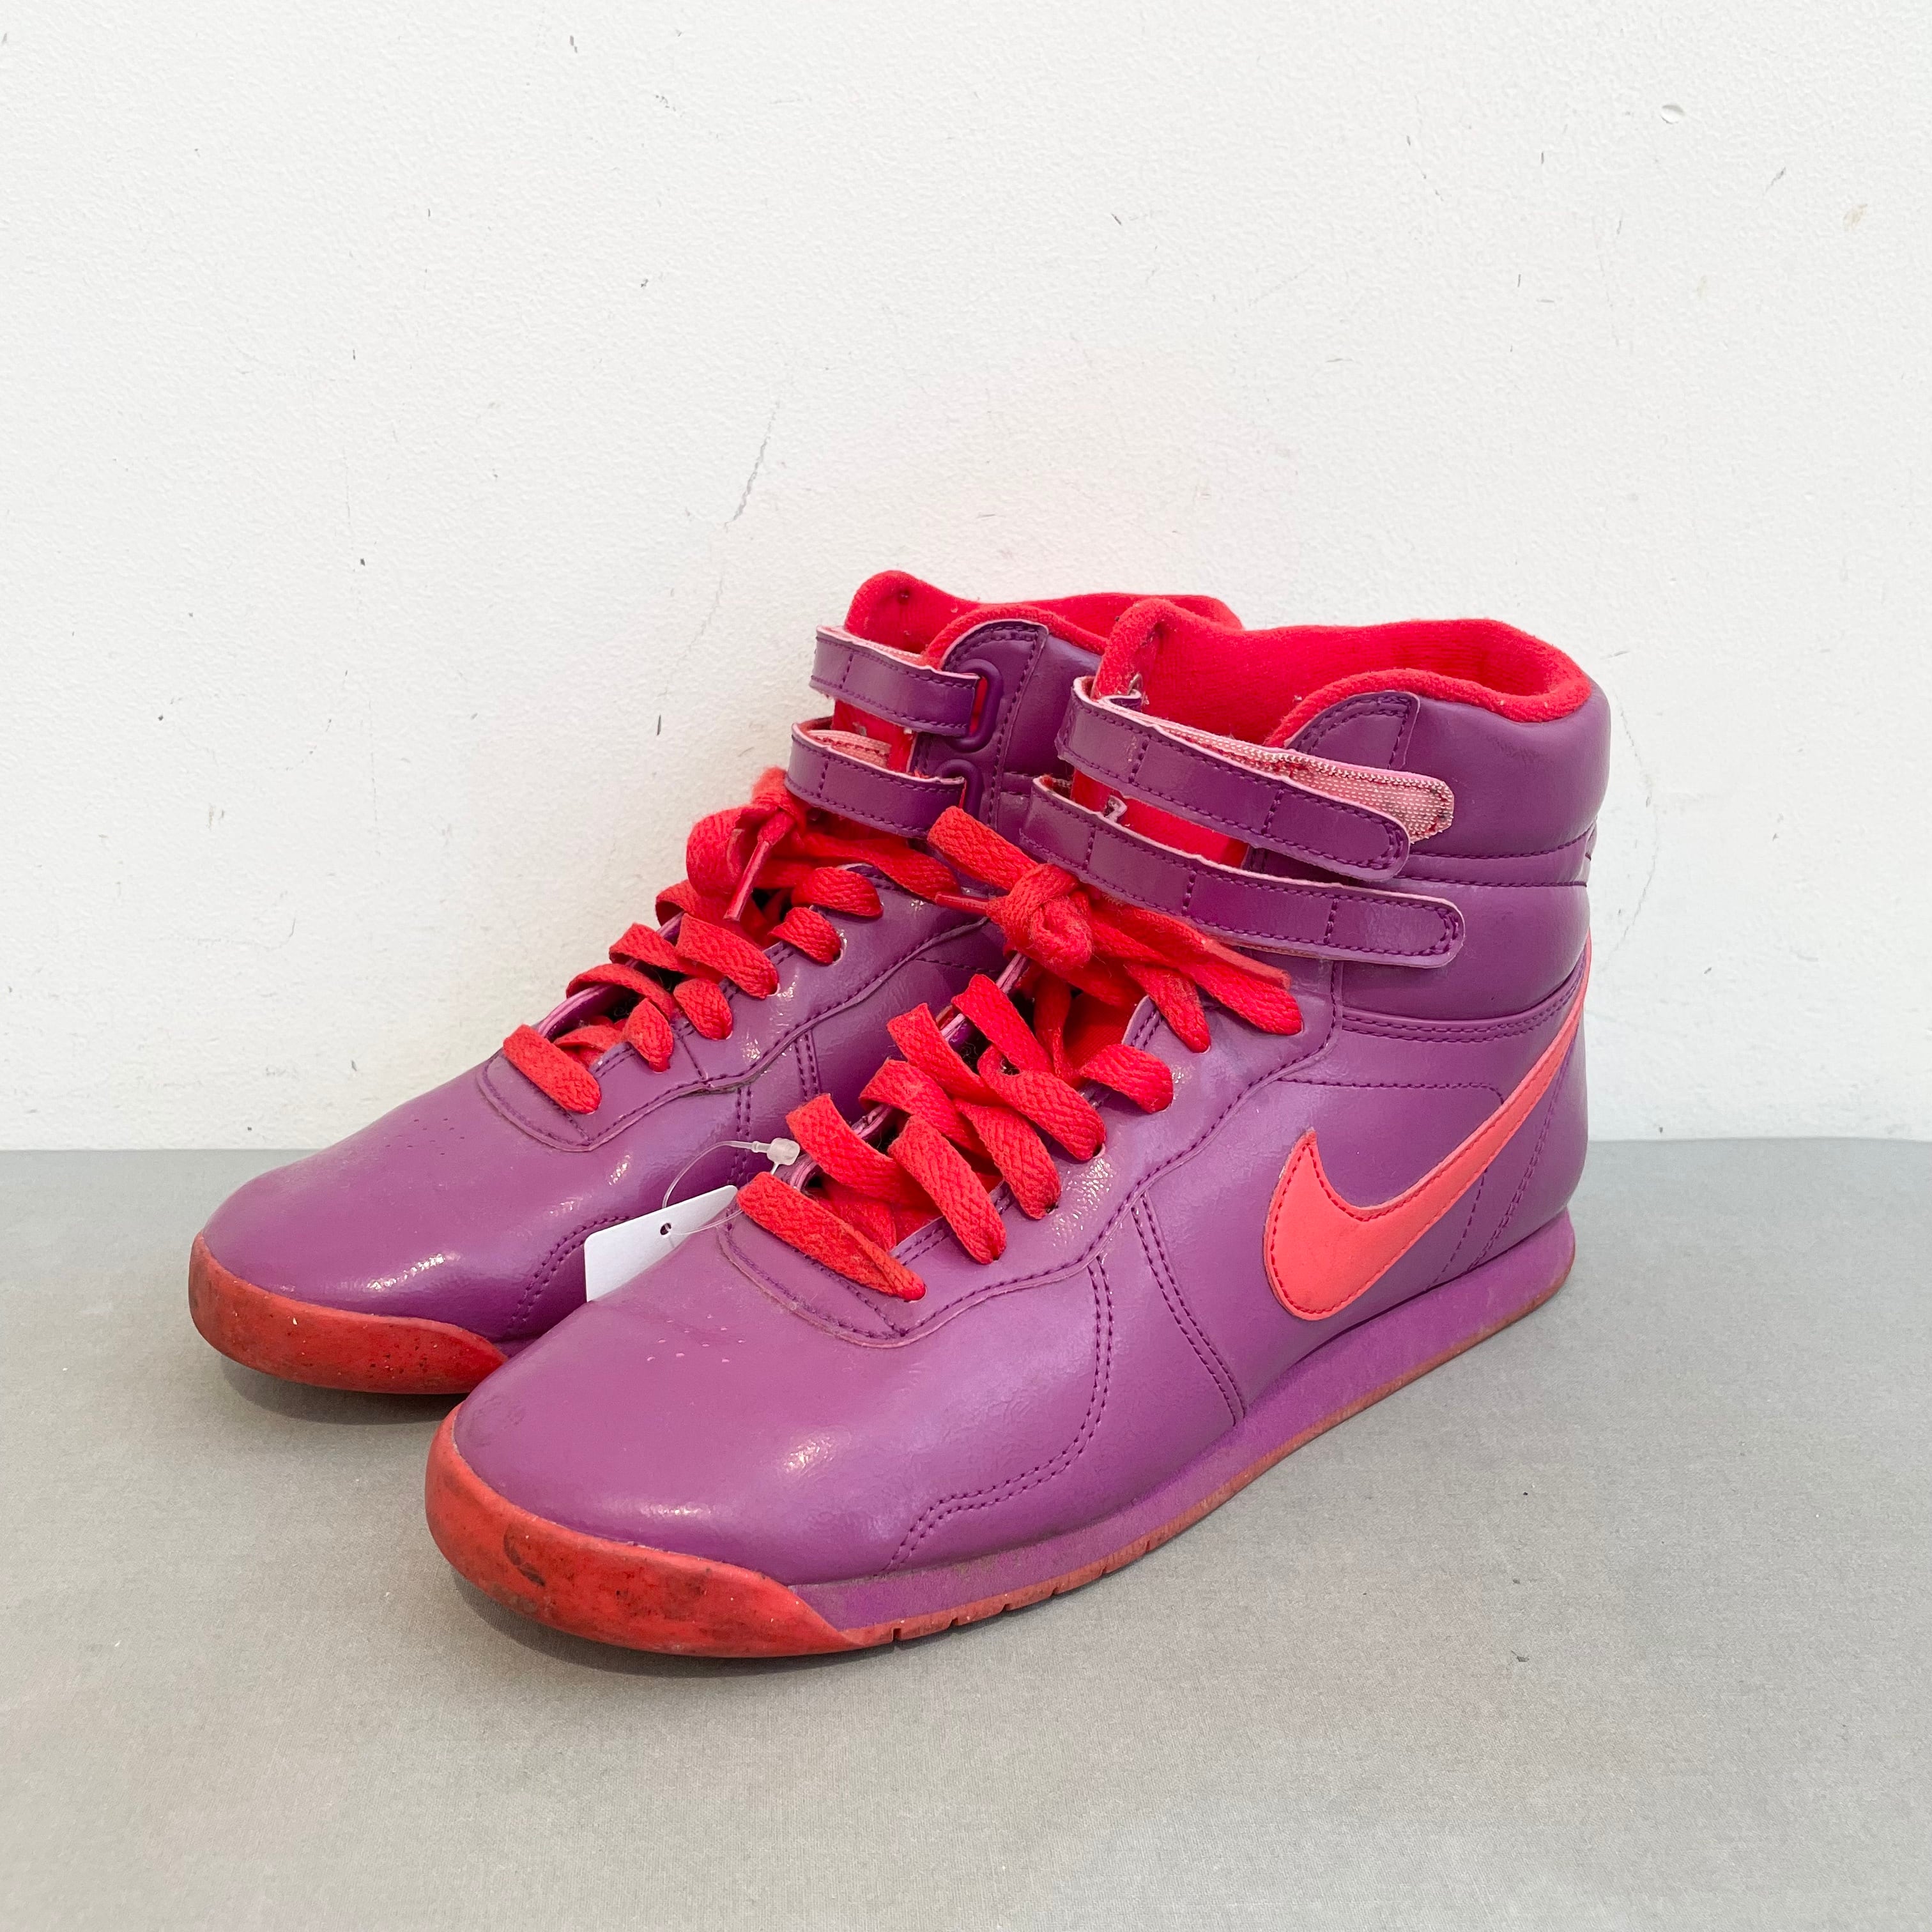 NIKE/shoes/sneaker/purple/red/ナイキ/靴/スニーカー/ハイカット/紫/赤